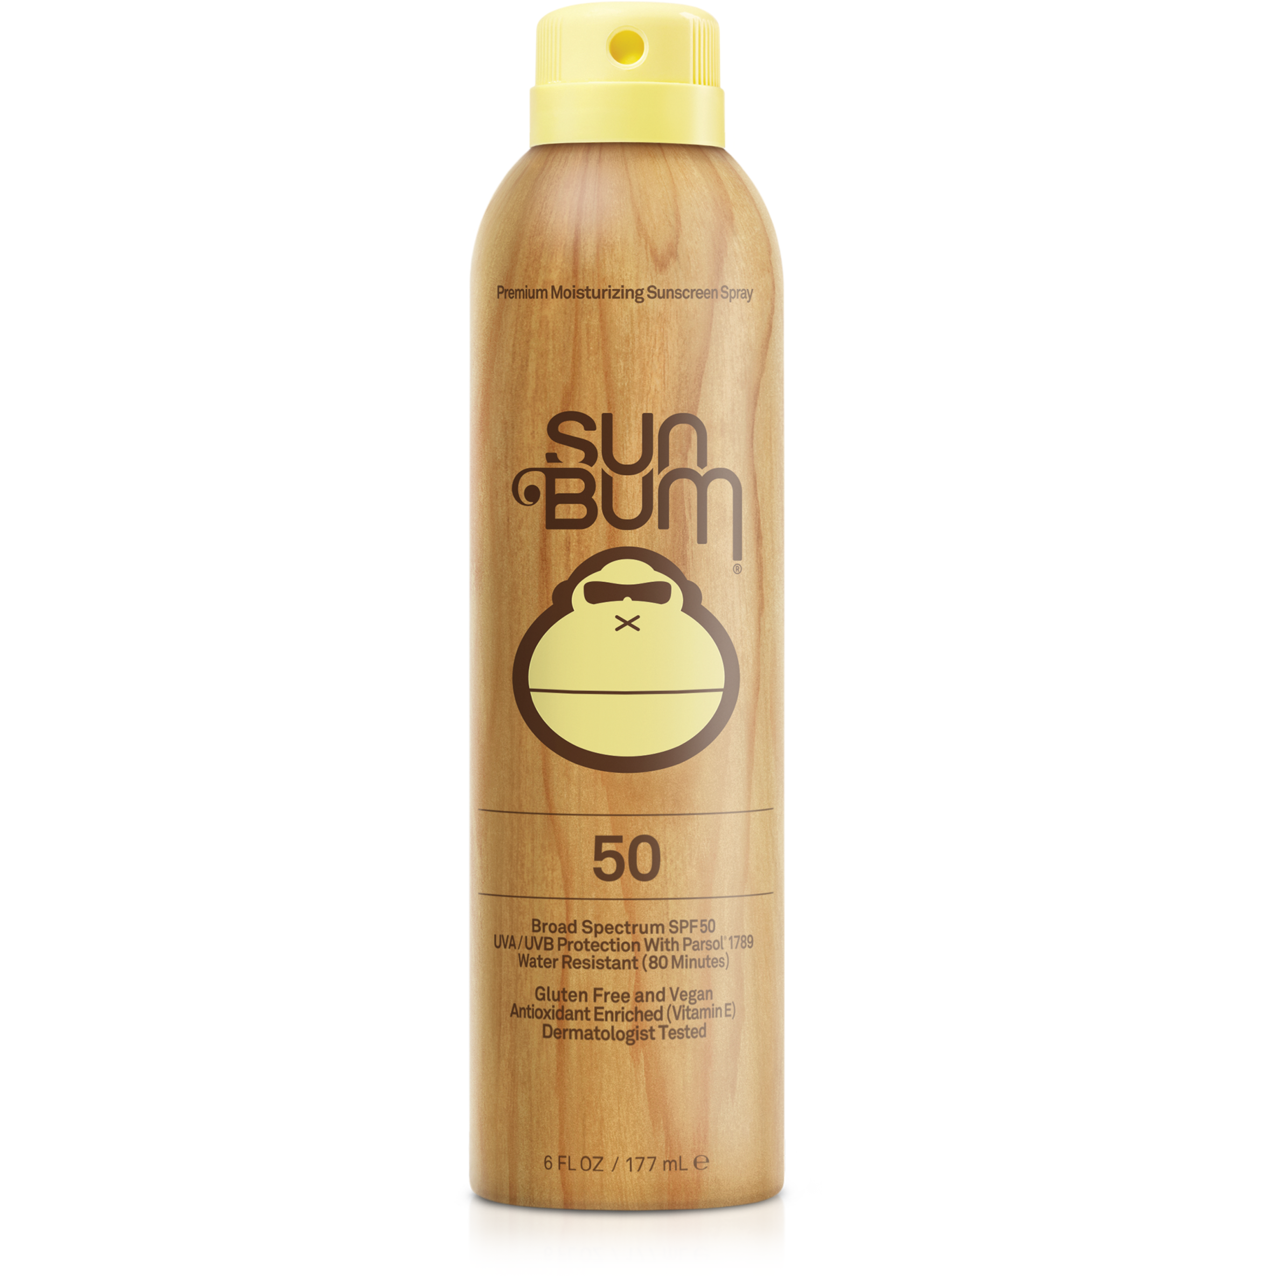 Sun Bum Original Sunscreen Spray - SPF 50